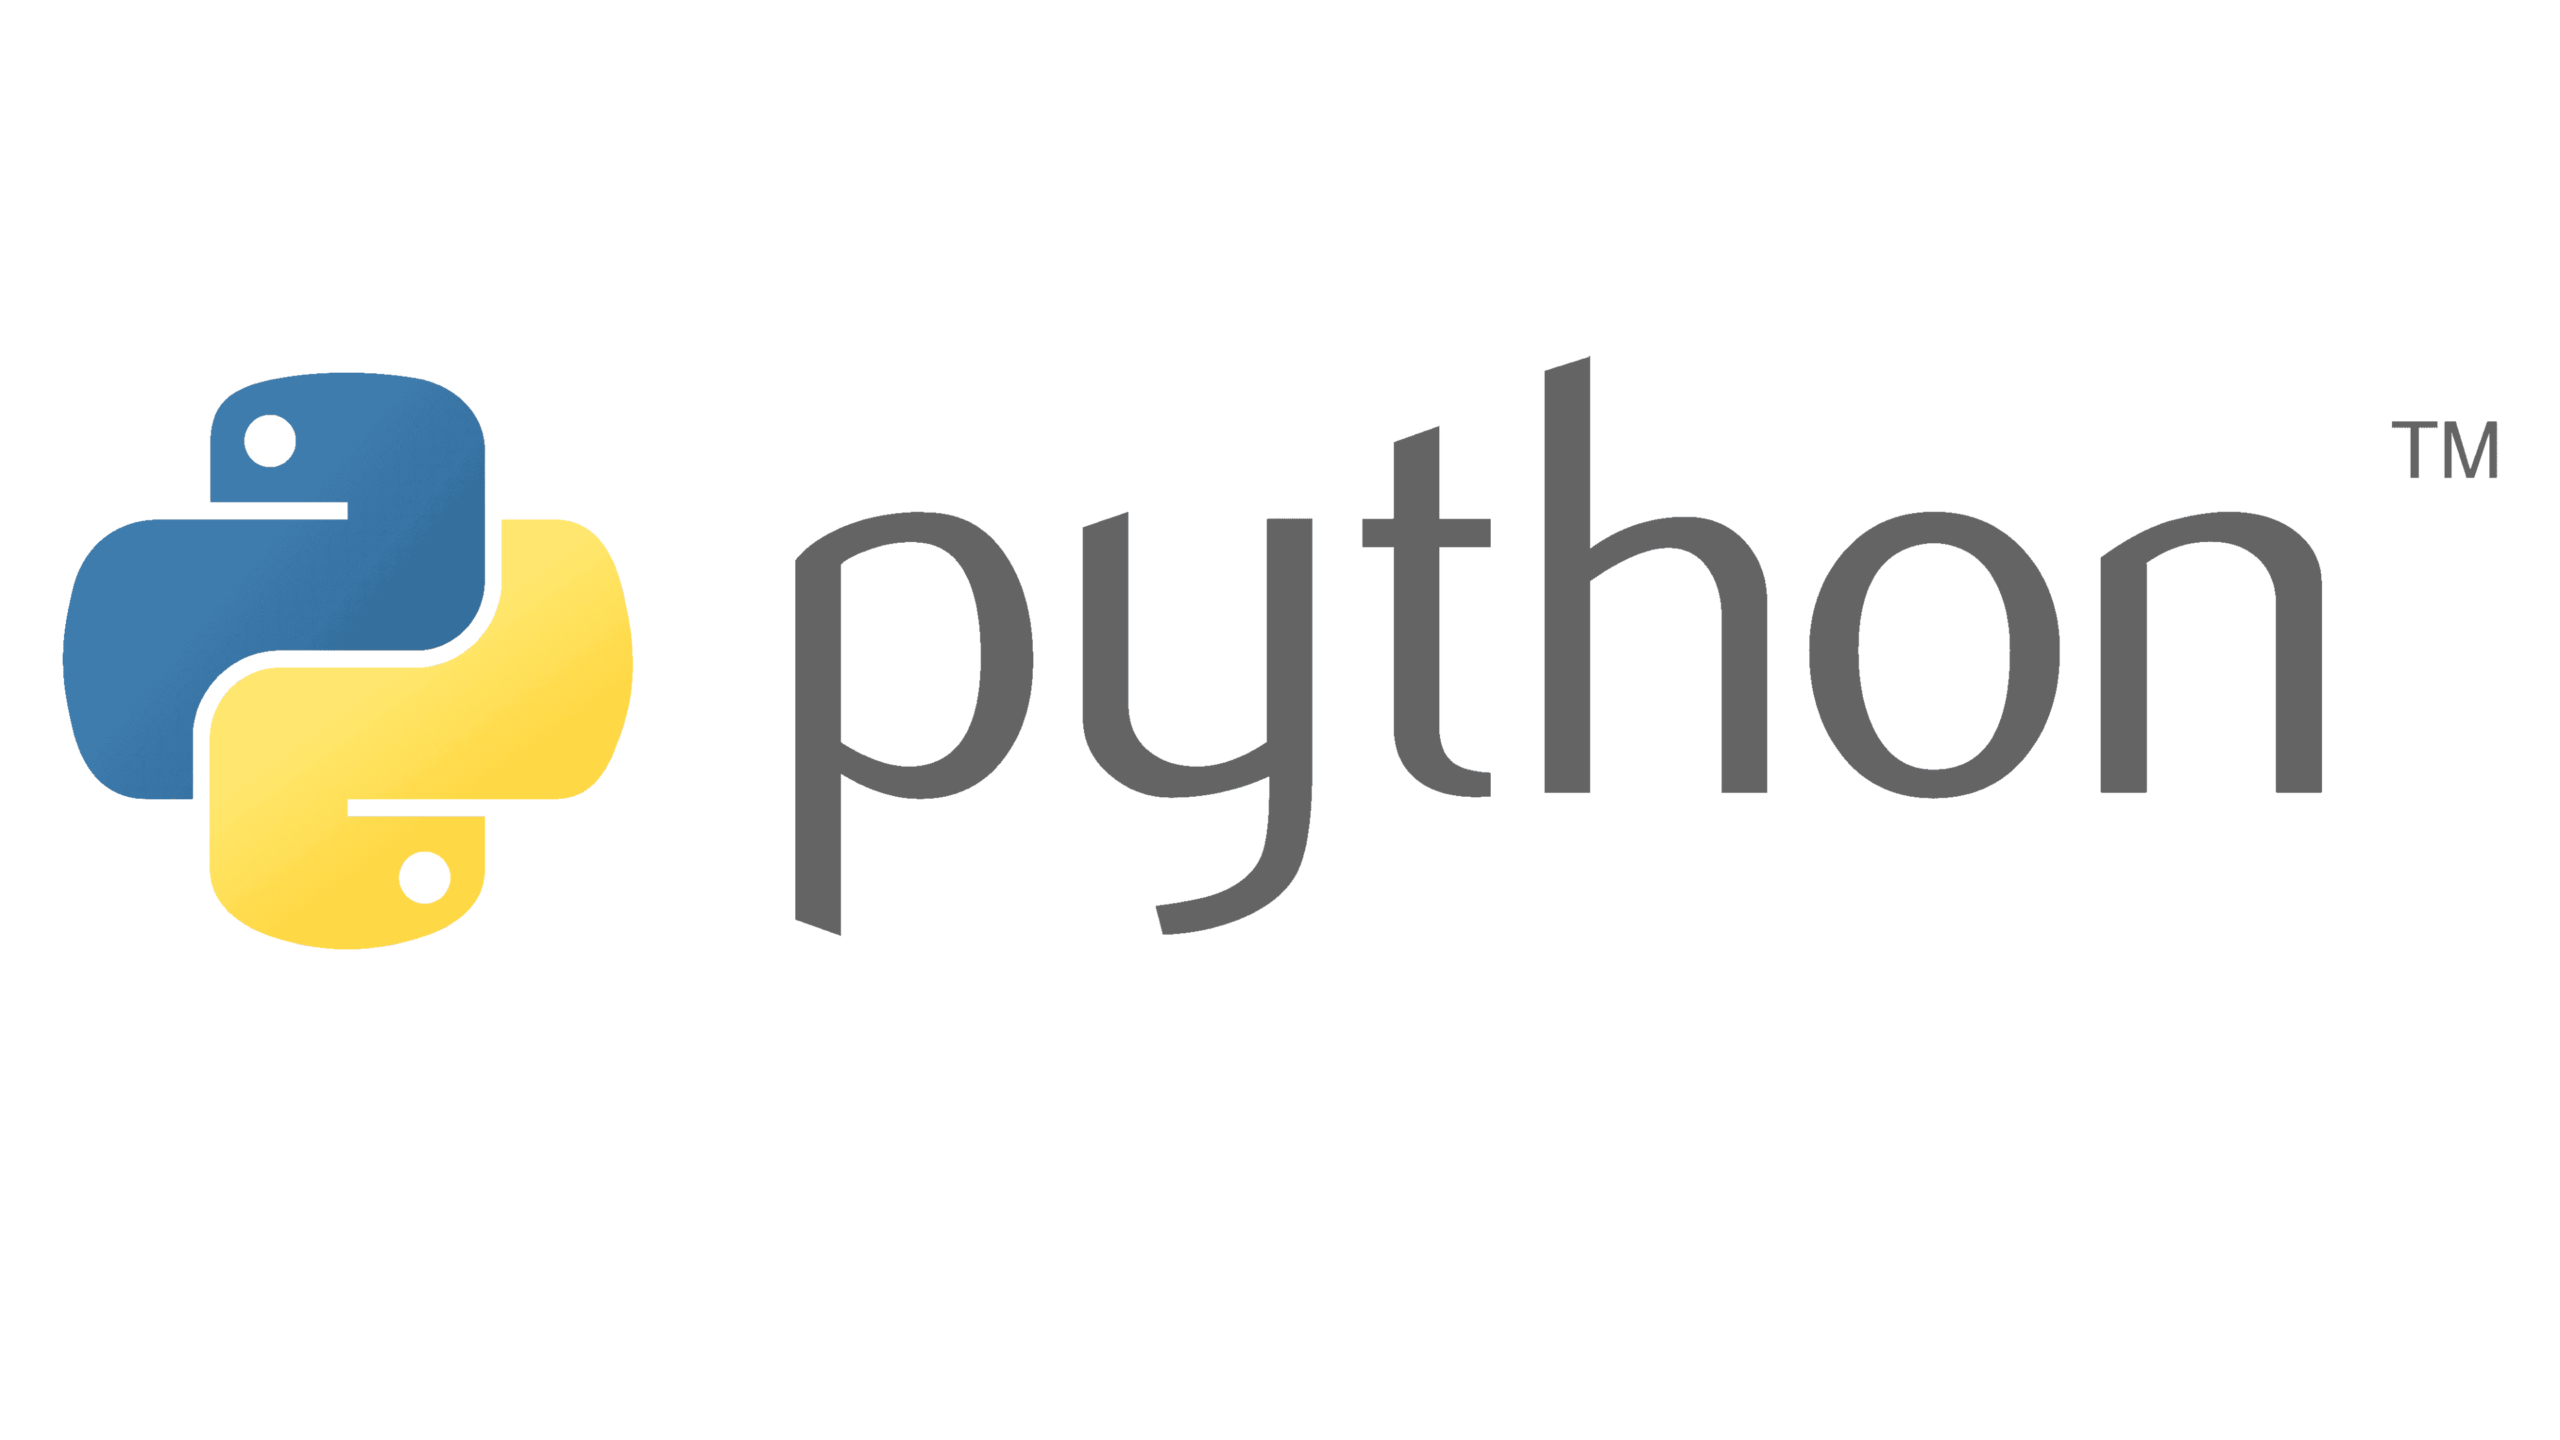 Développement Python